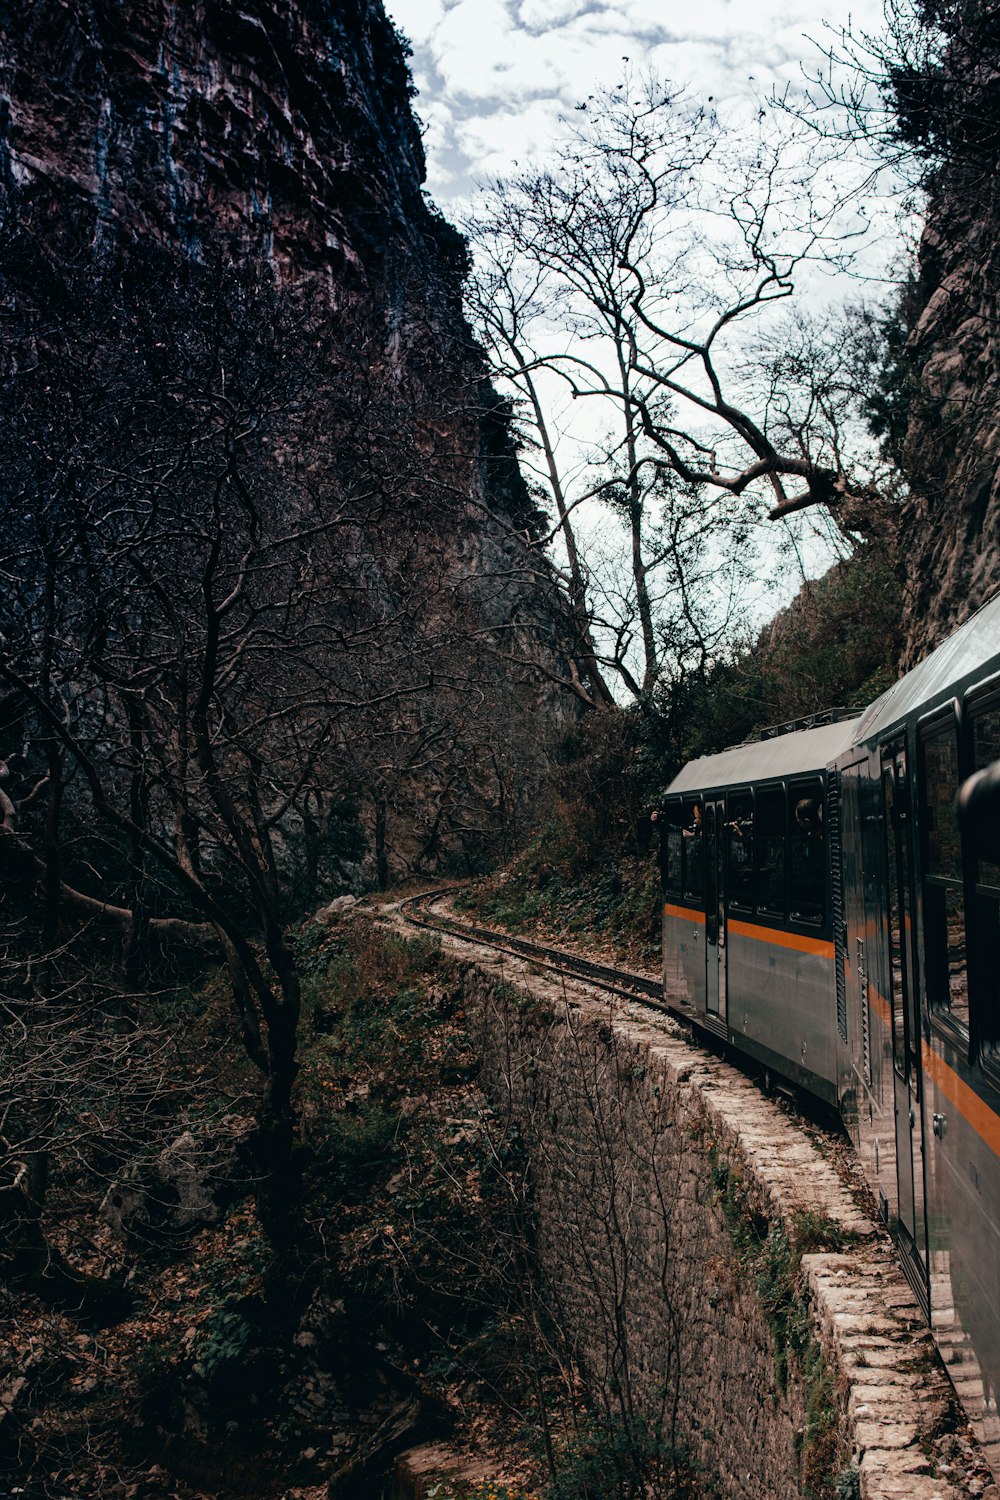 white train on rail near trees during daytime